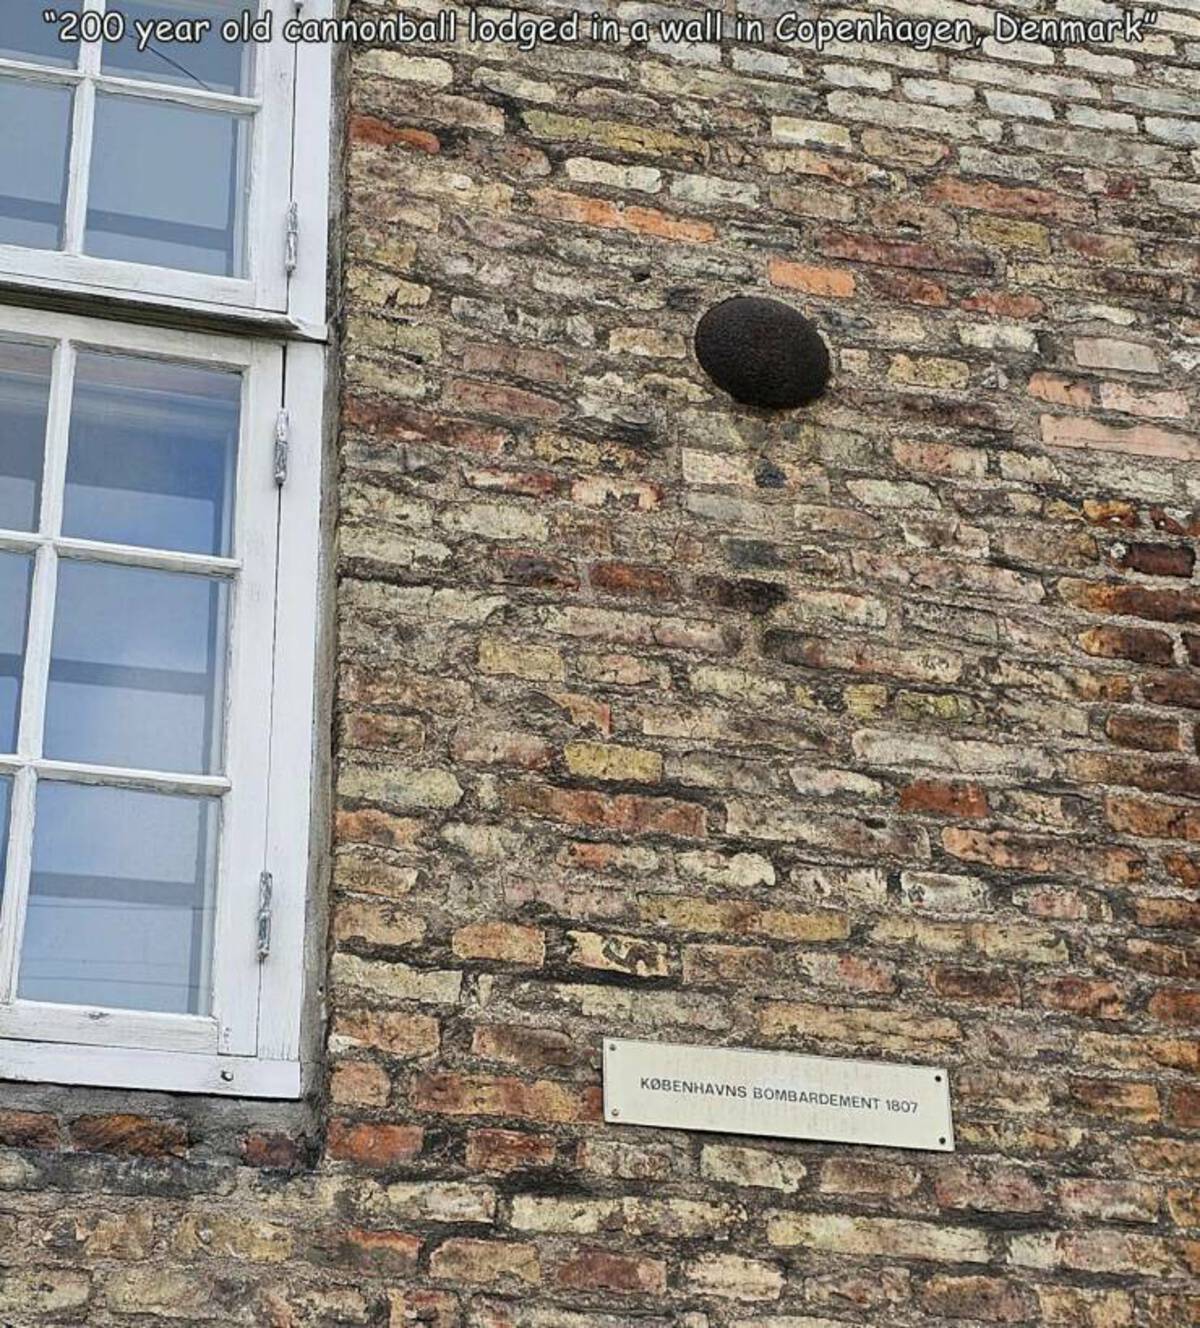 bella italia - york - "200 year old cannonball lodged in a wall in Copenhagen, Denmark" Kbenhavns Bombardement 1807